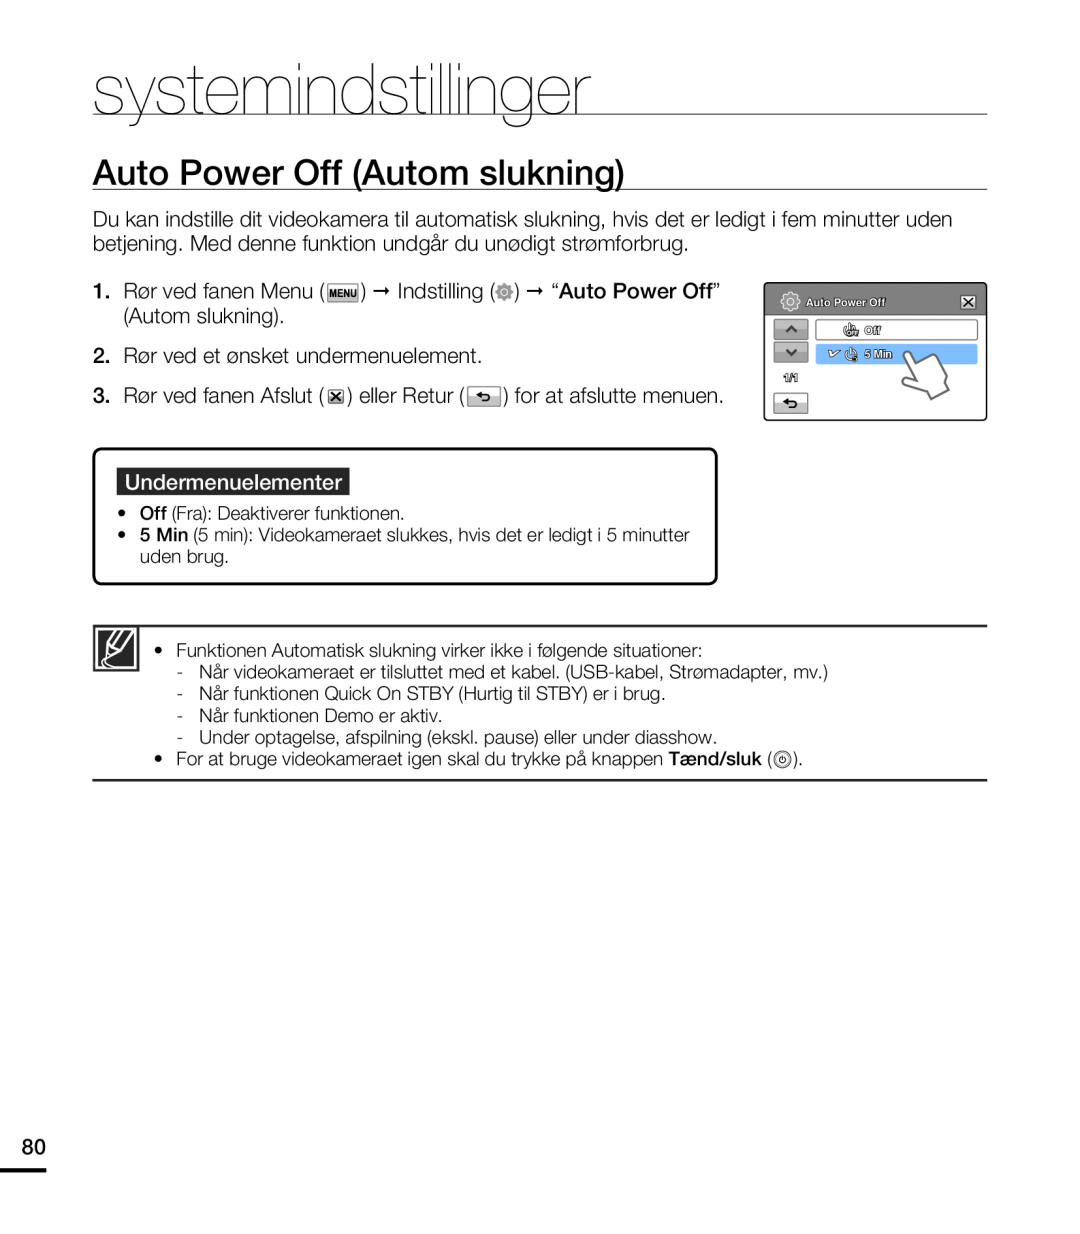 Samsung HMX-T10WP/EDC Auto Power Off Autom slukning, systemindstillinger, Undermenuelementer, Auto Power Off Off 5 Min 1/1 